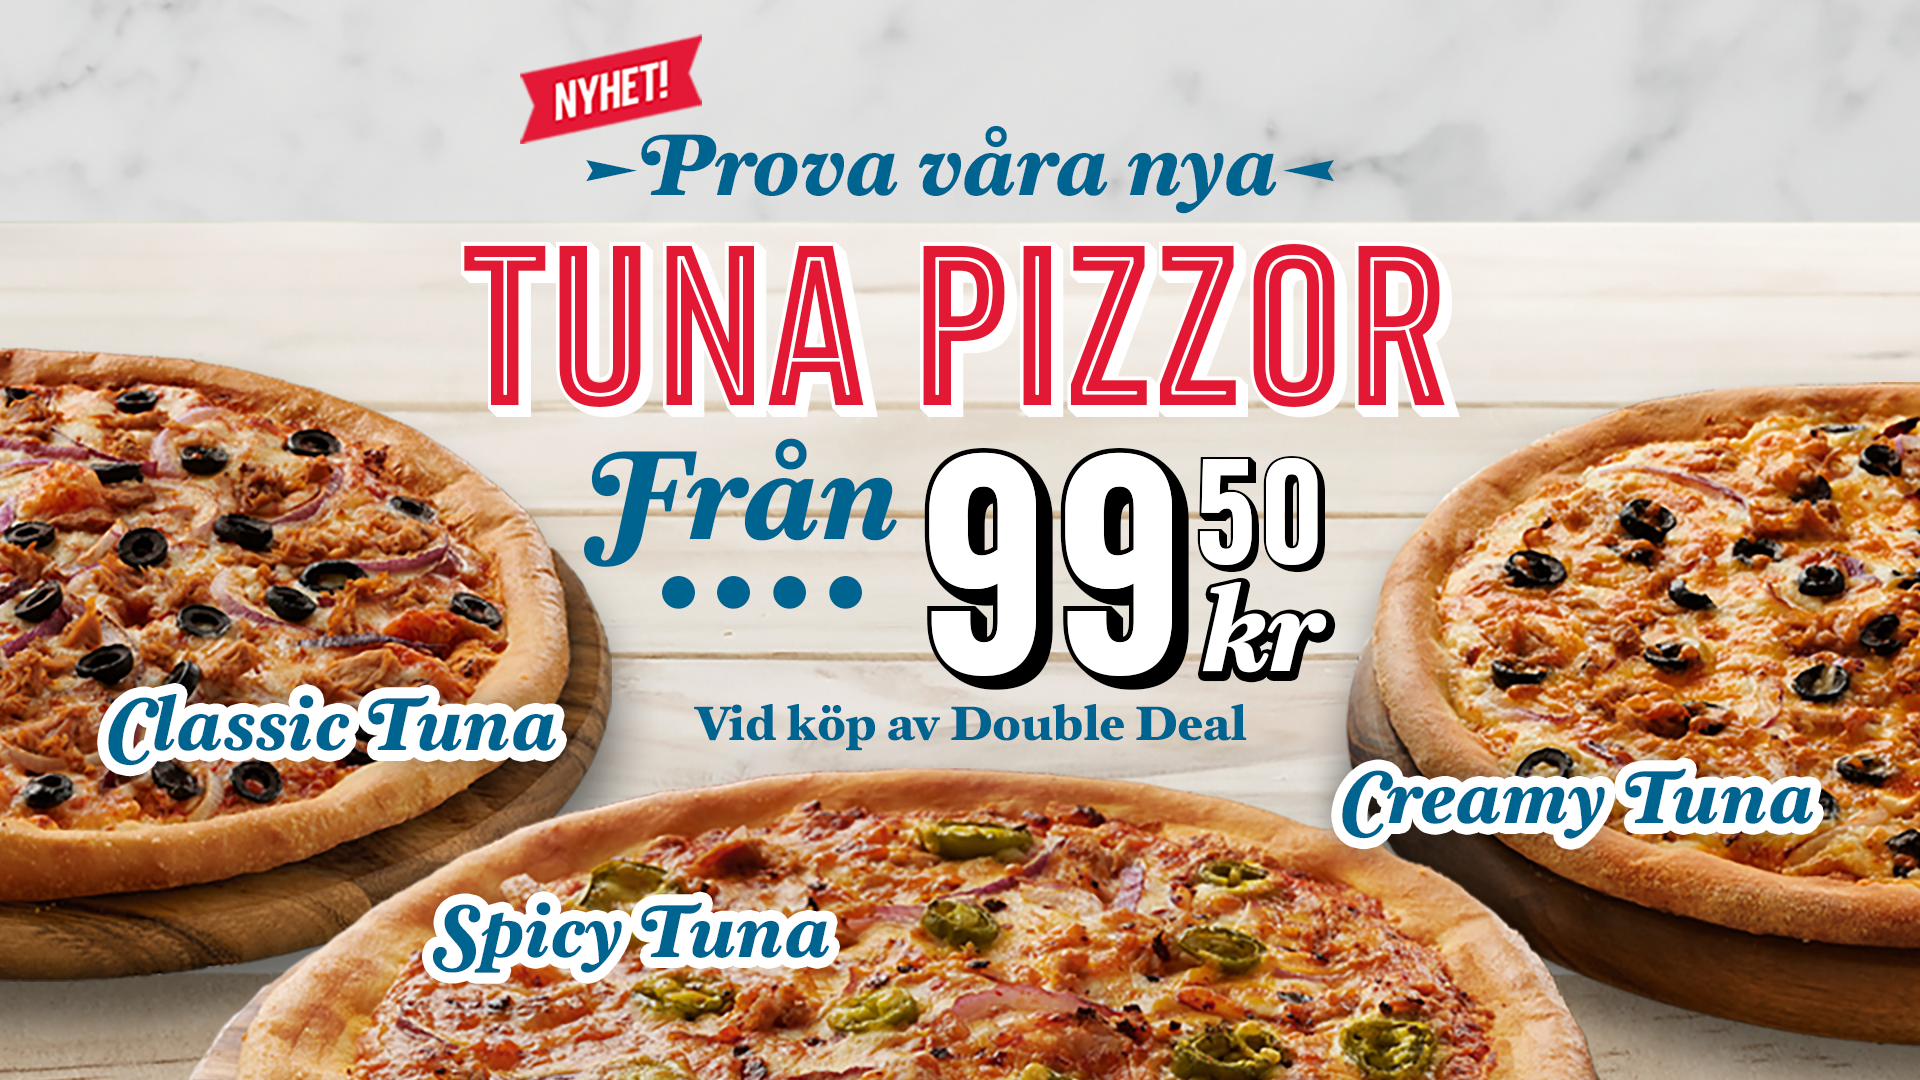 Nya Tuna pizzor 99,50kr